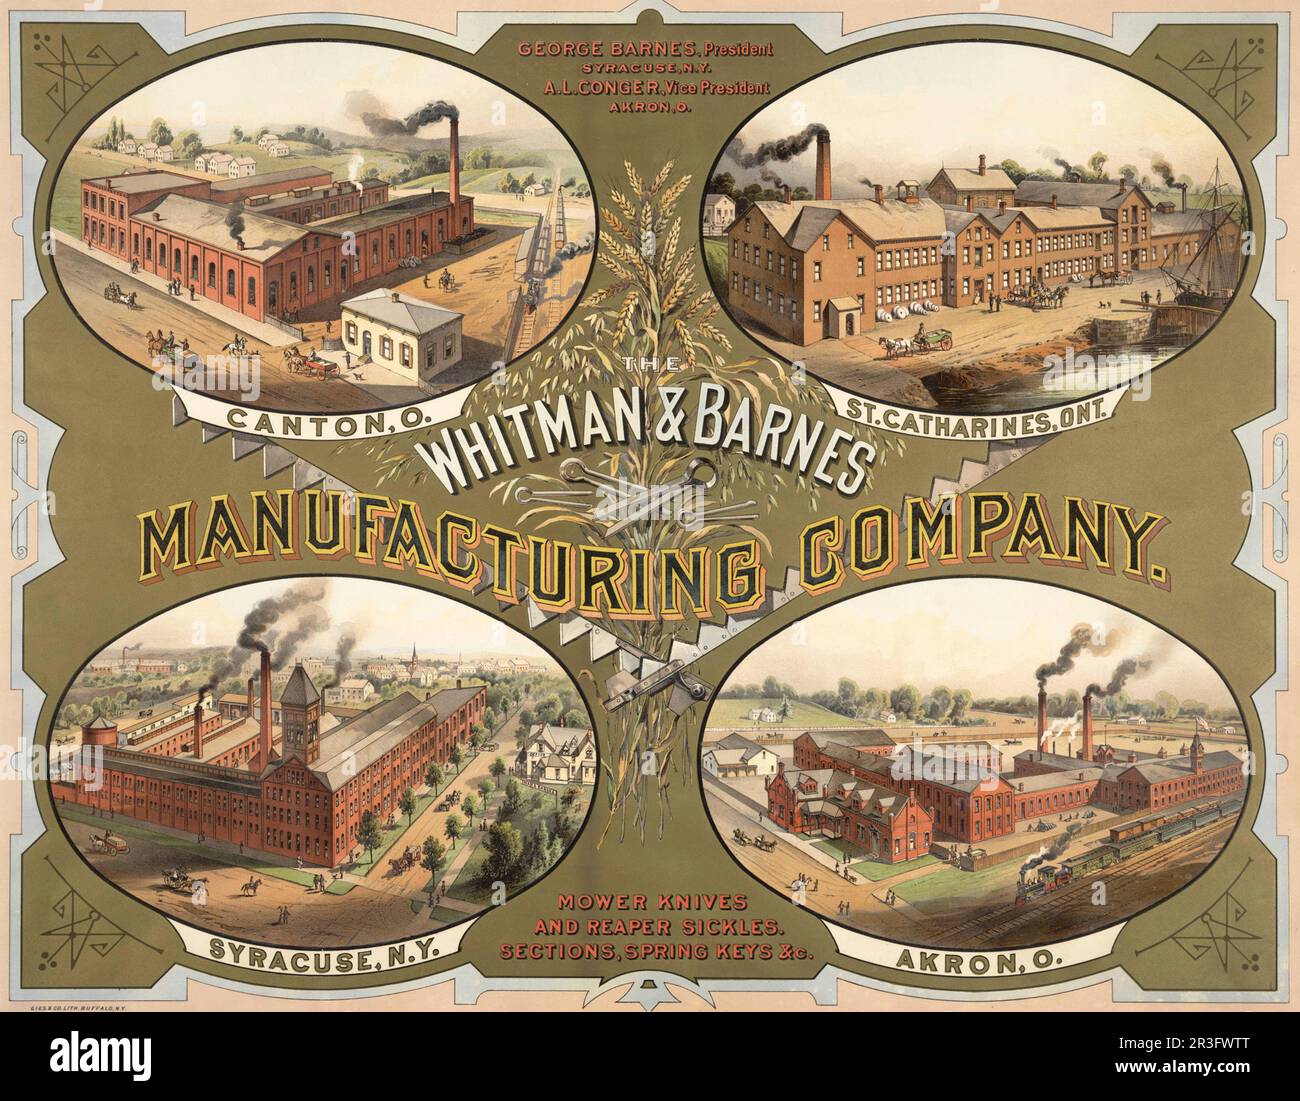 Whitman & Barnes Manufacturing Company. Stockfoto